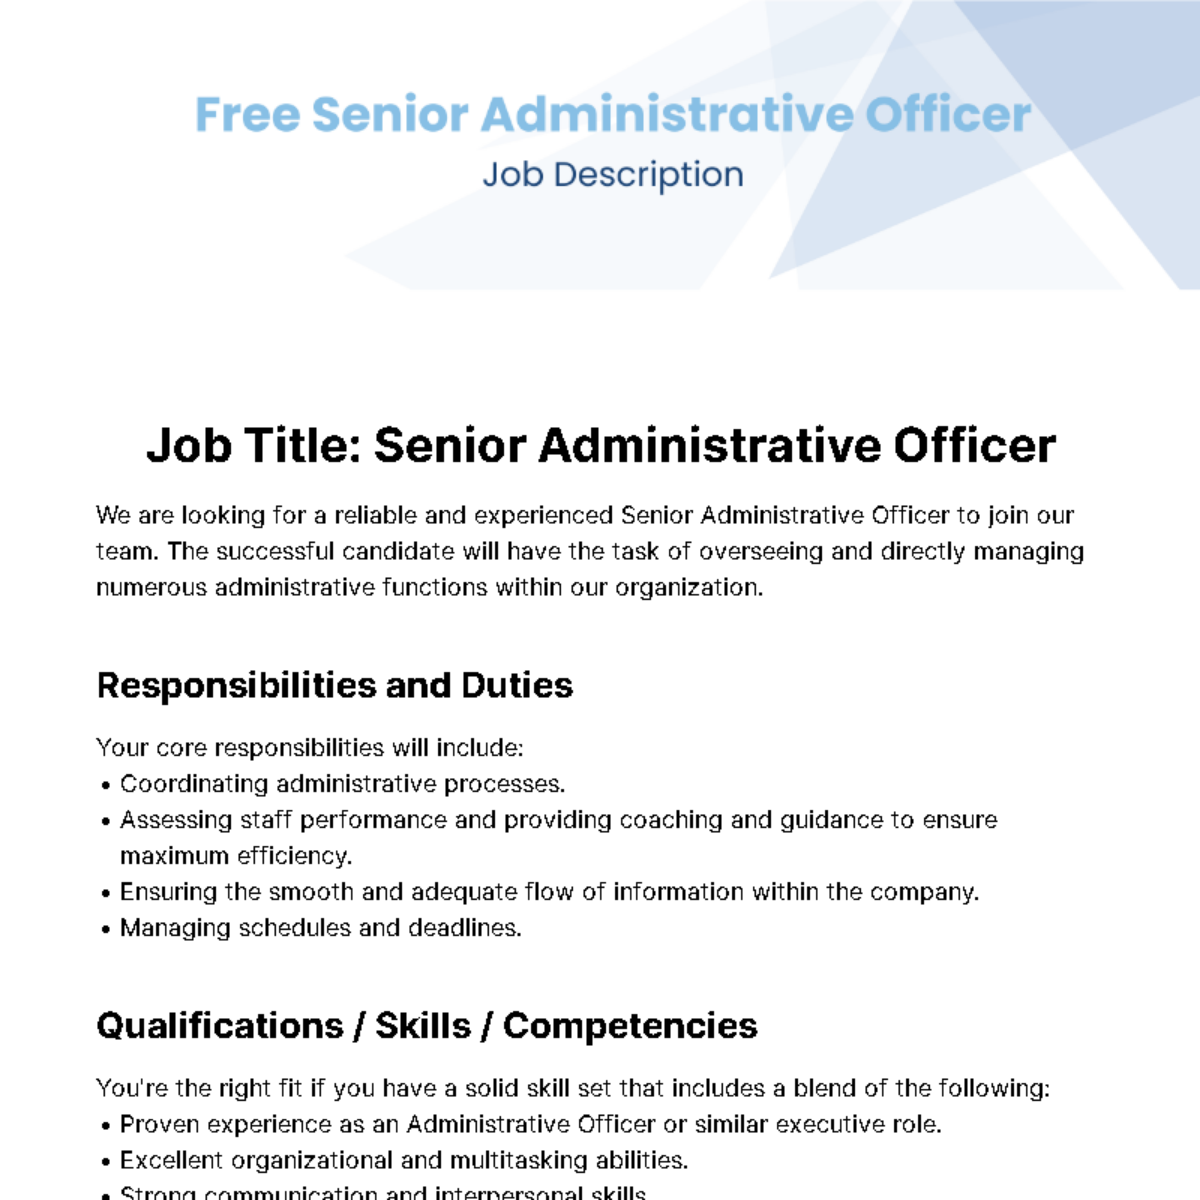 Free Senior Administrative Officer Job Description Template